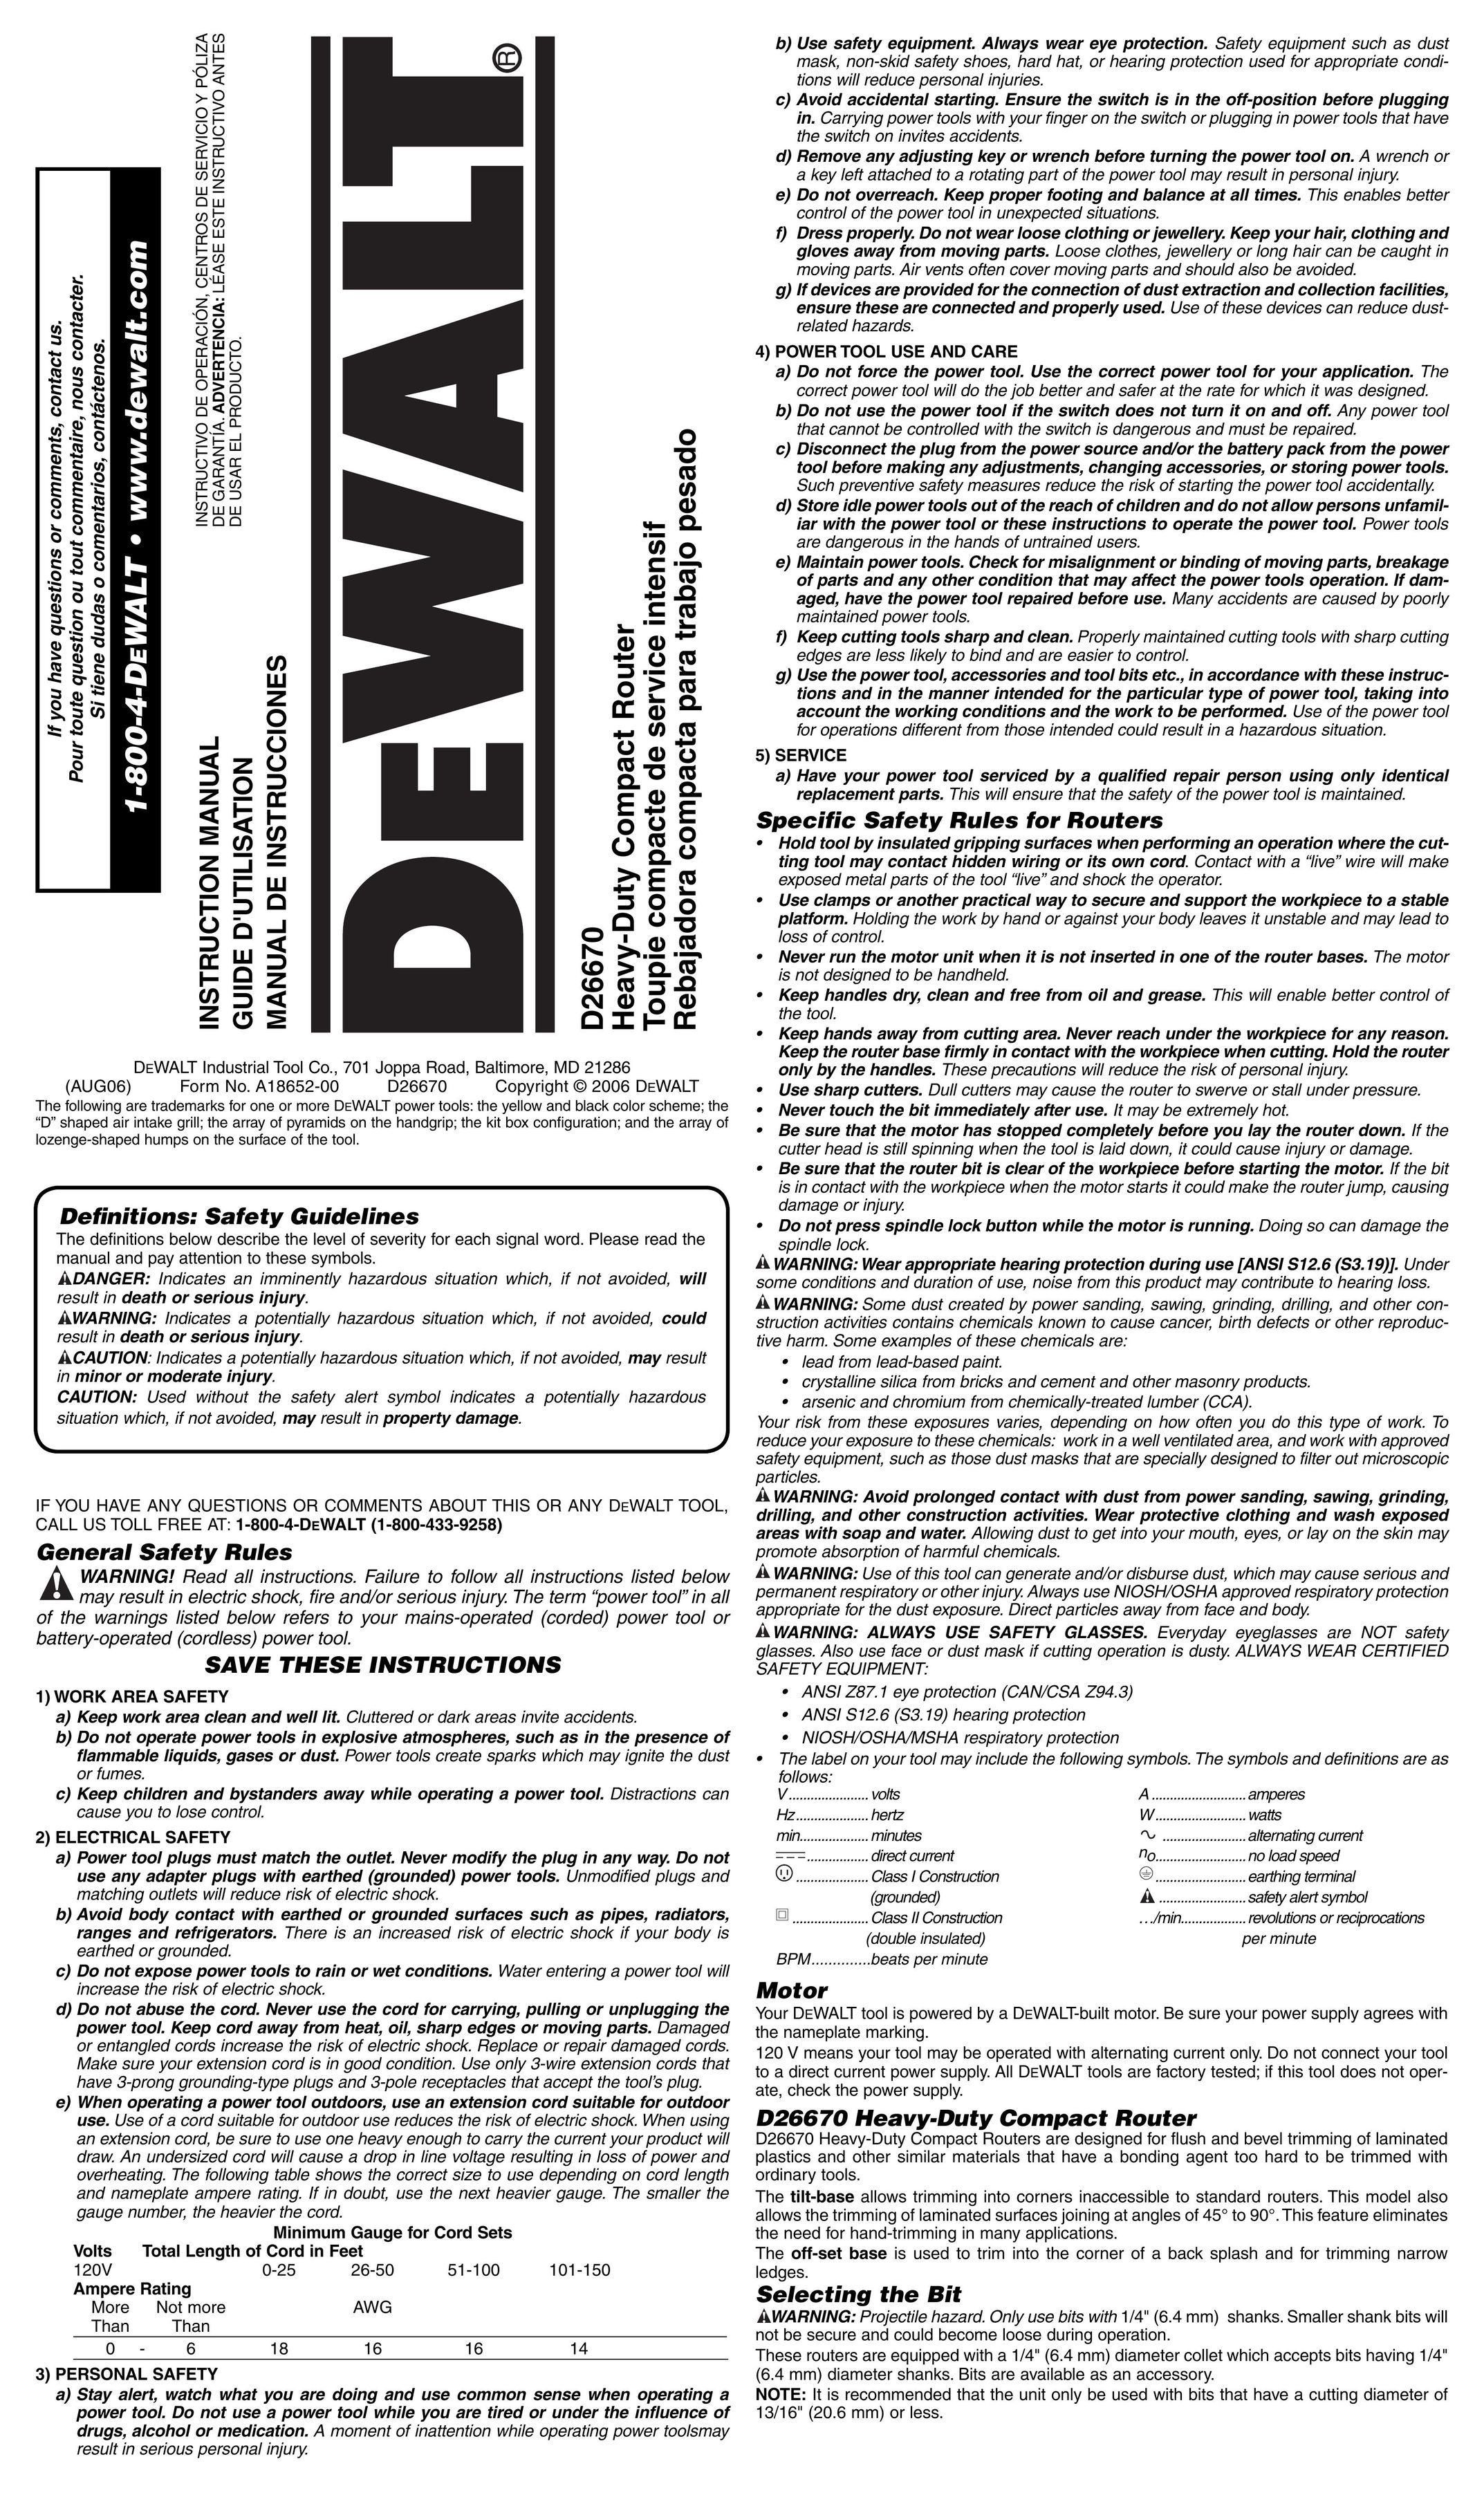 DeWalt D26670 Router User Manual